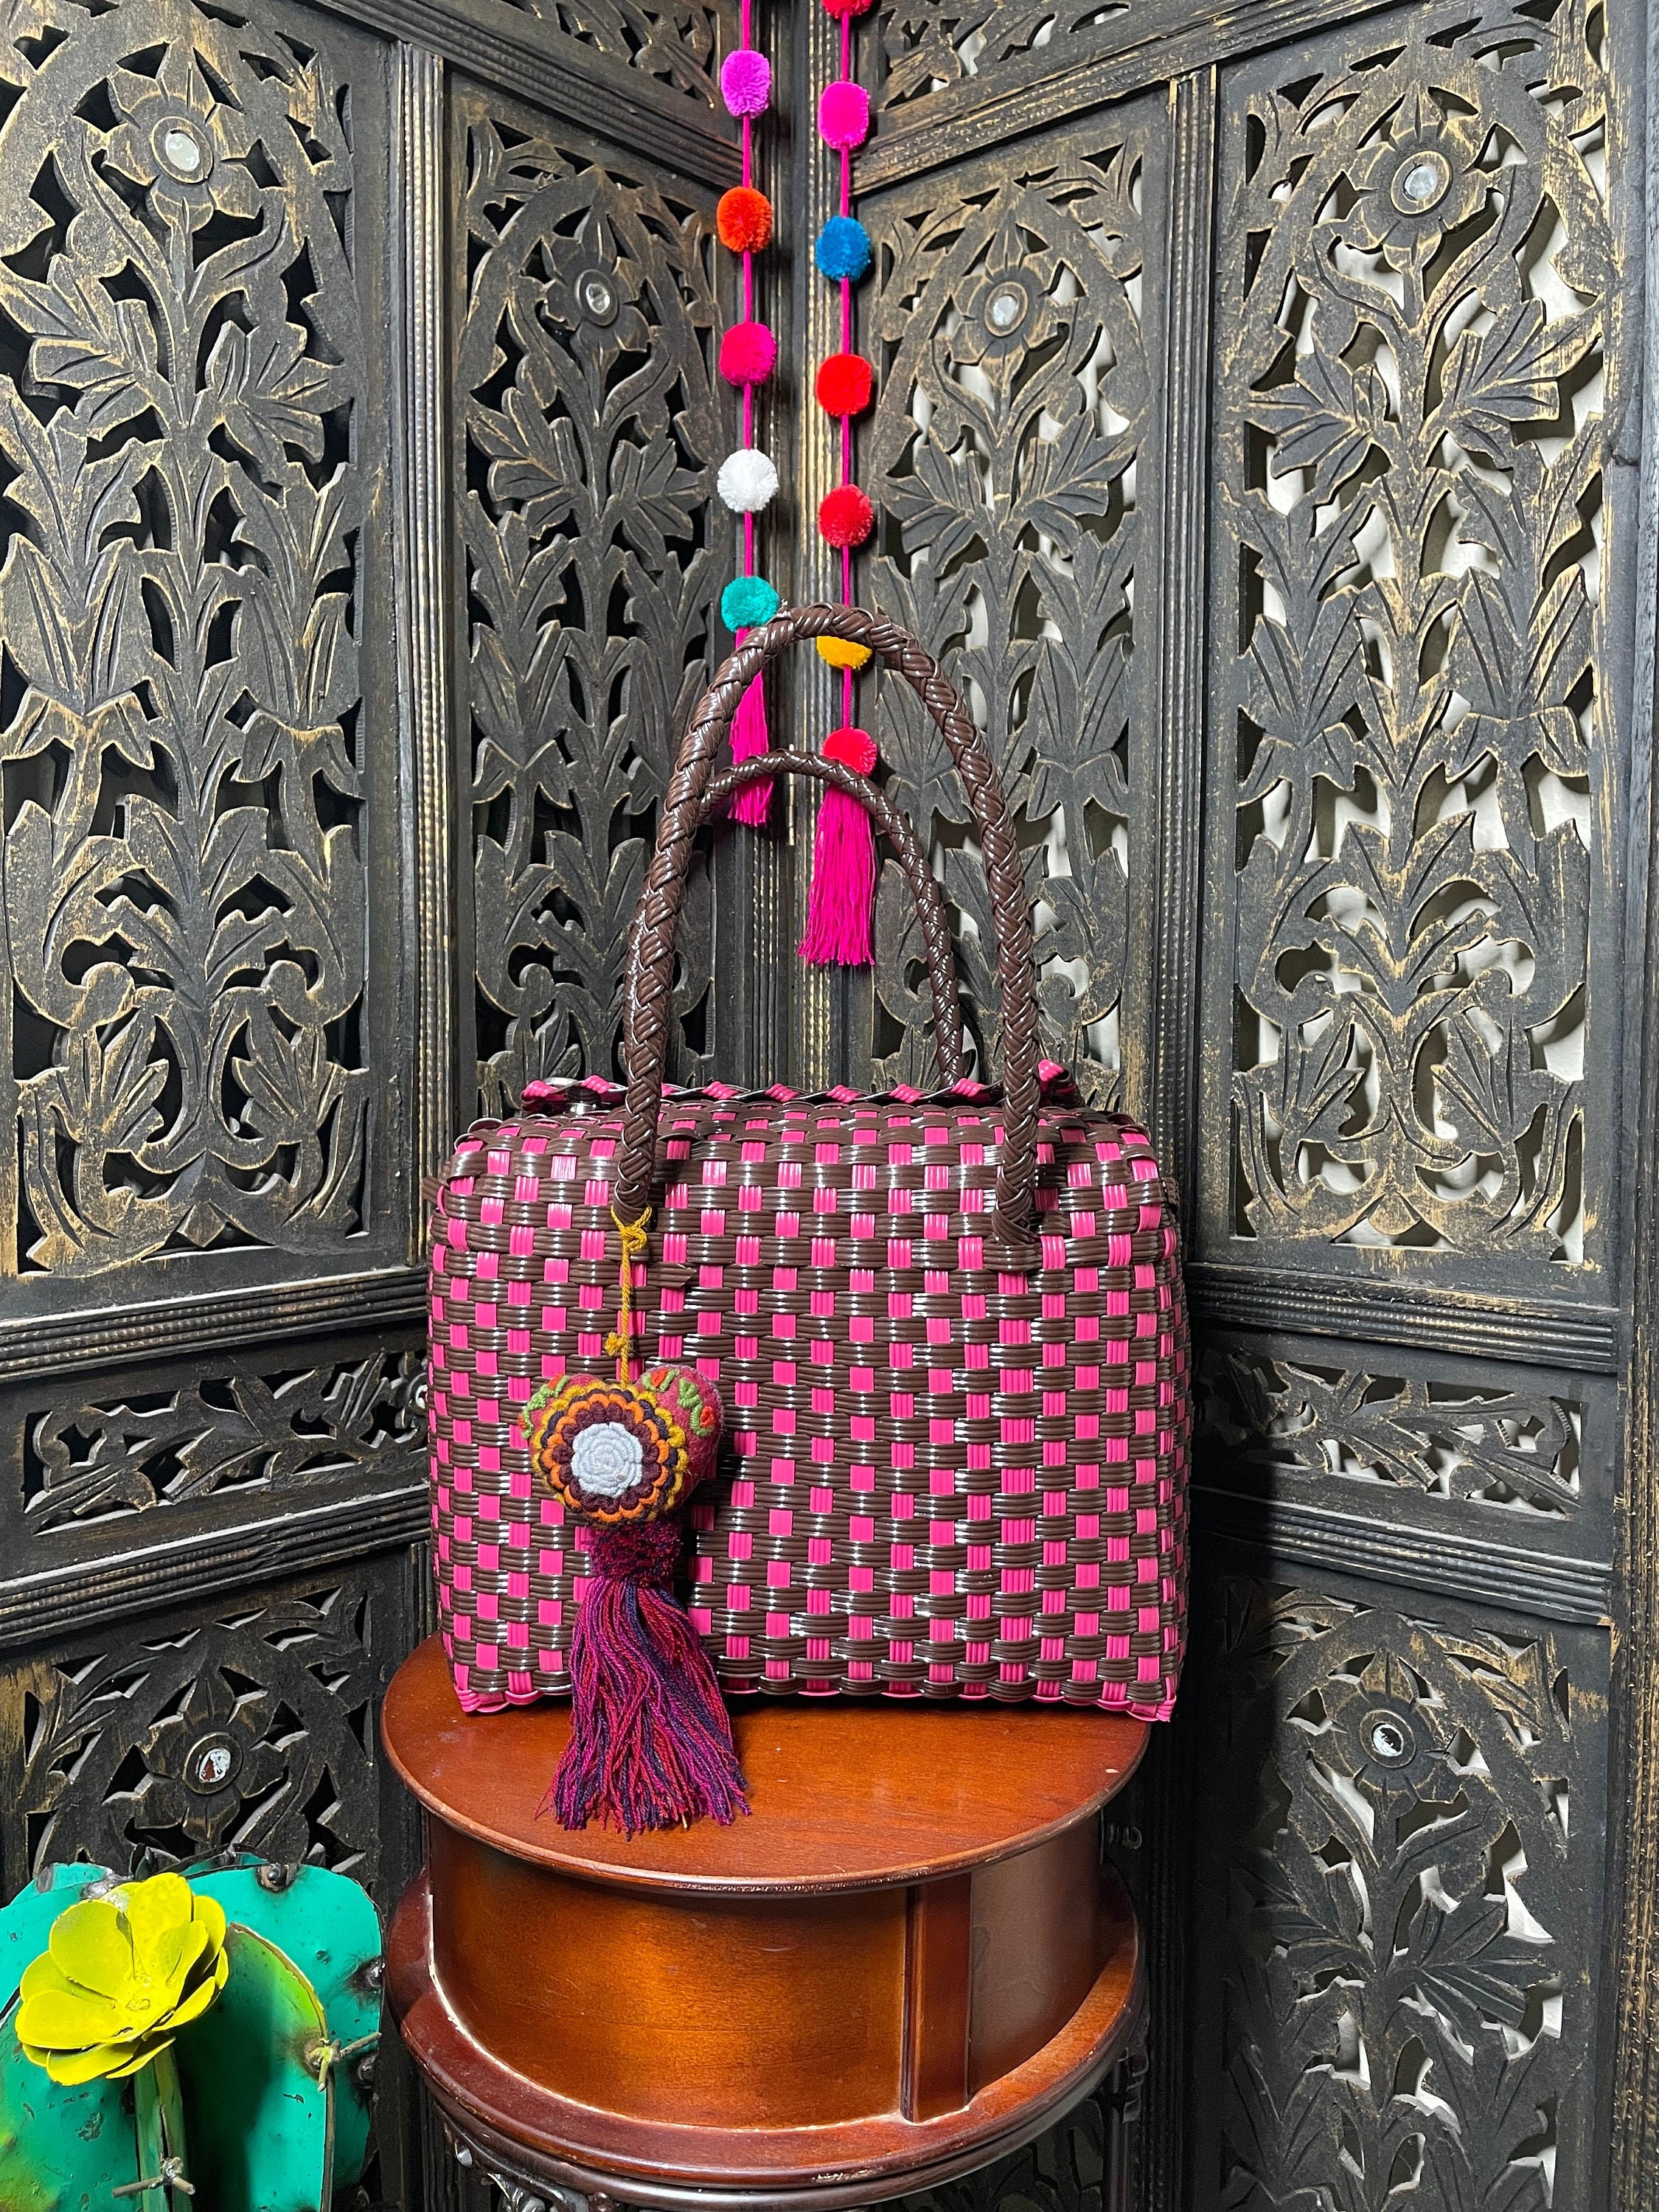 Maeve Loop Bag Elegant Italian Leather Shoulder Bag Handcrafted Real Artisan Leather Bag Perfect Gift for Her